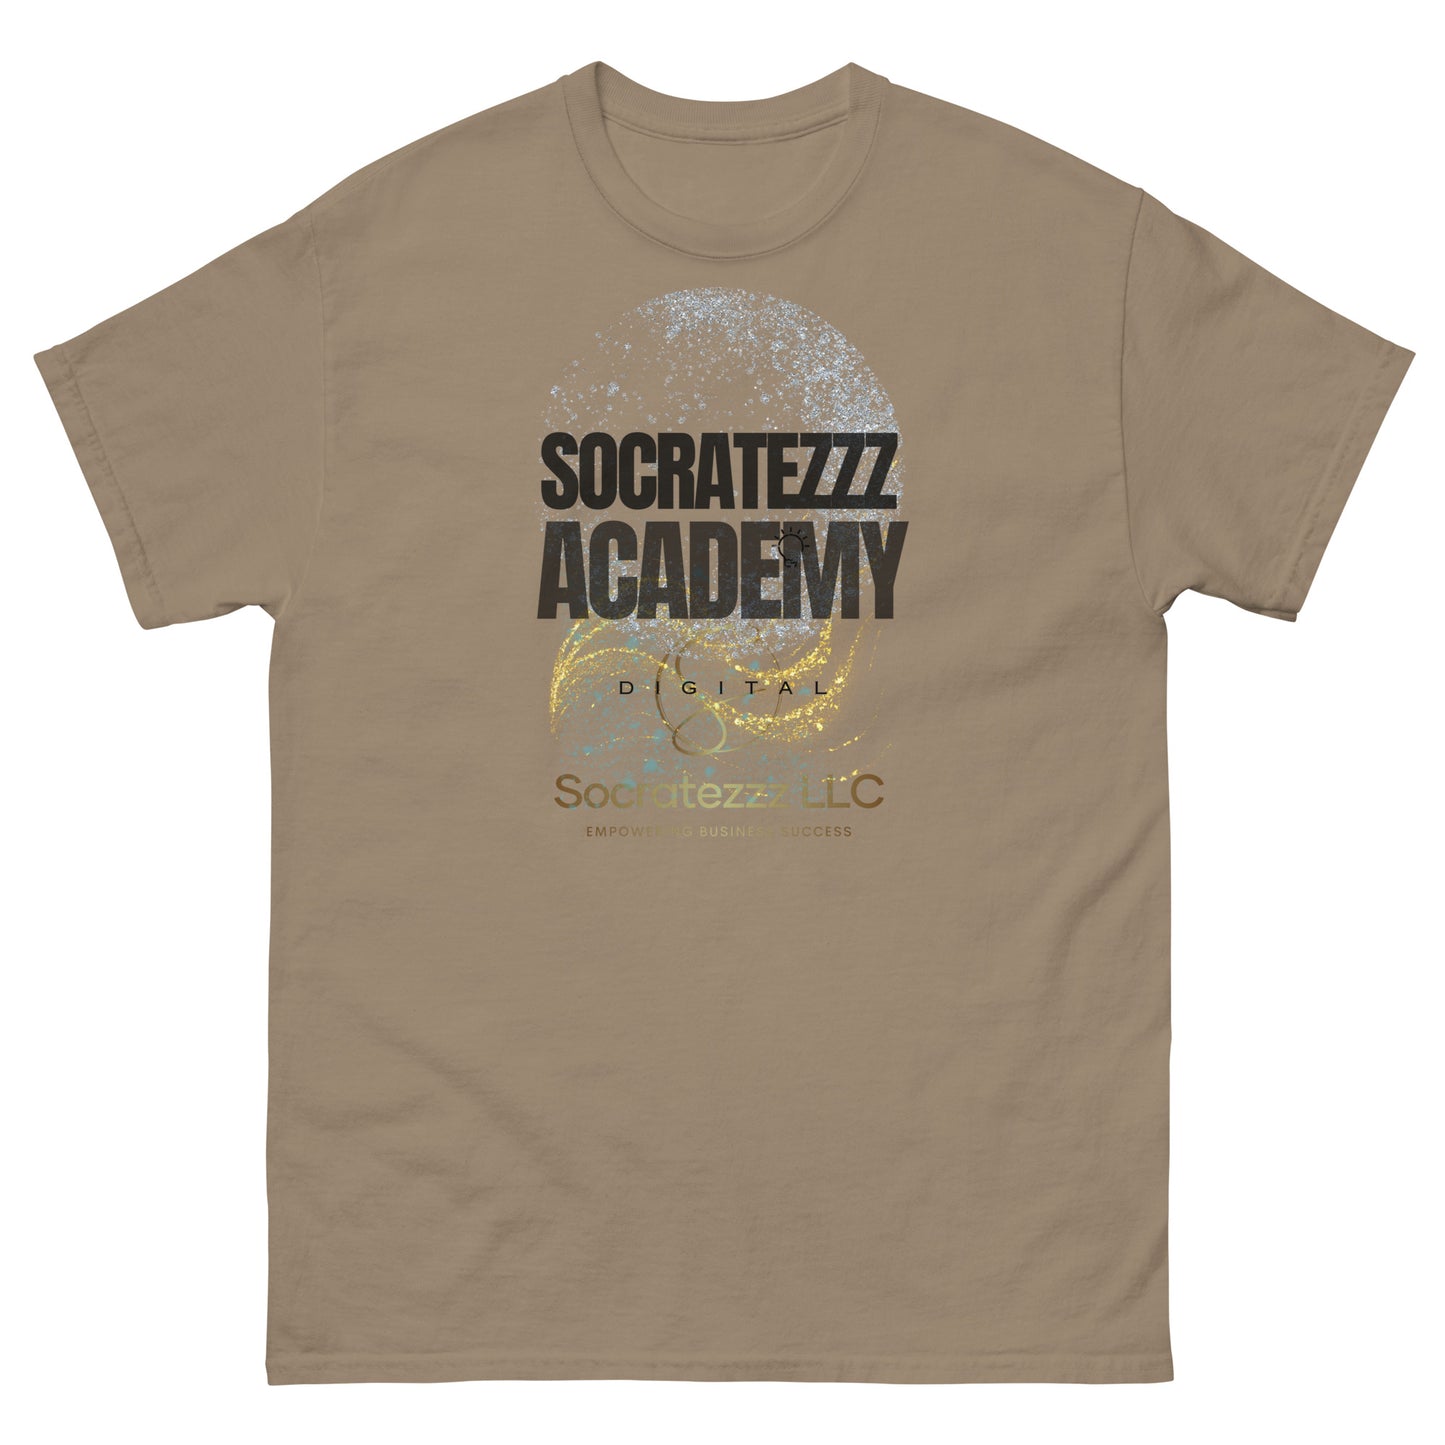 Socratezzz Academy - Men's classic tee